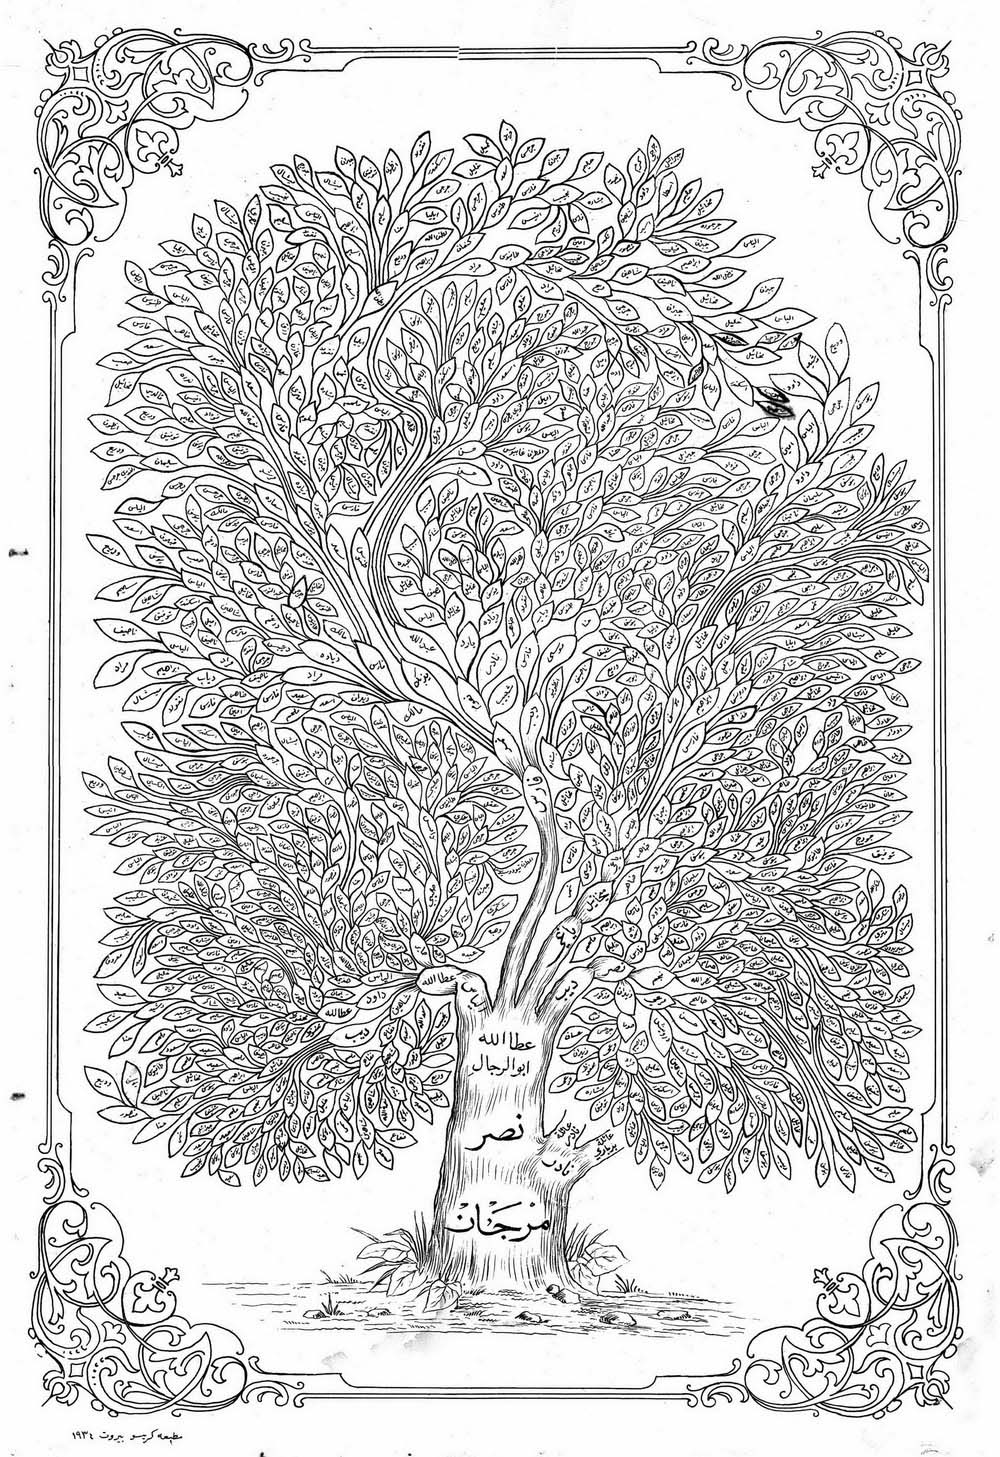 Abou Rjeily Family tree of 1934